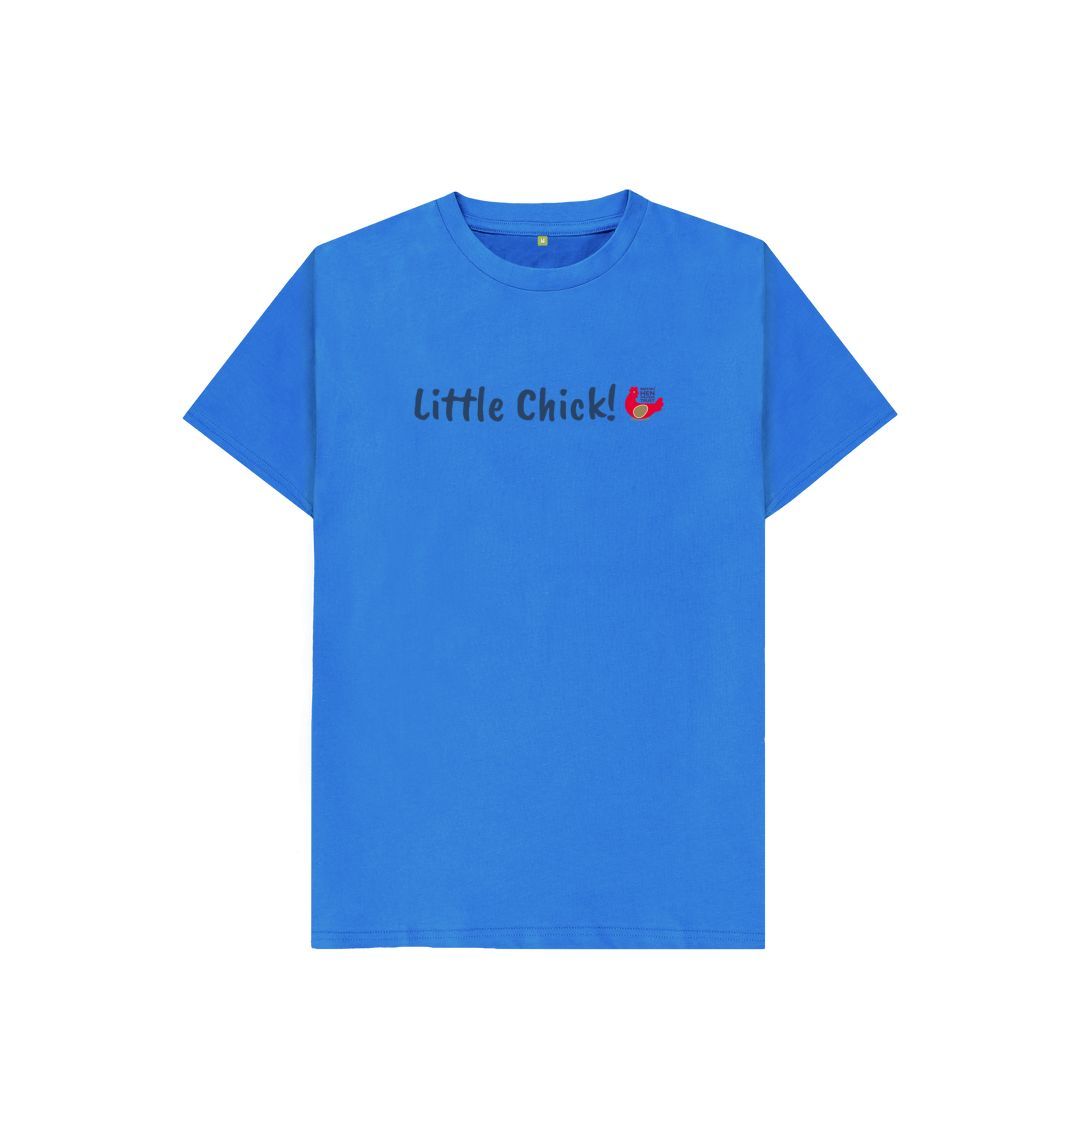 Bright Blue Little Chick! Kids Unisex Short Sleeve T-Shirt